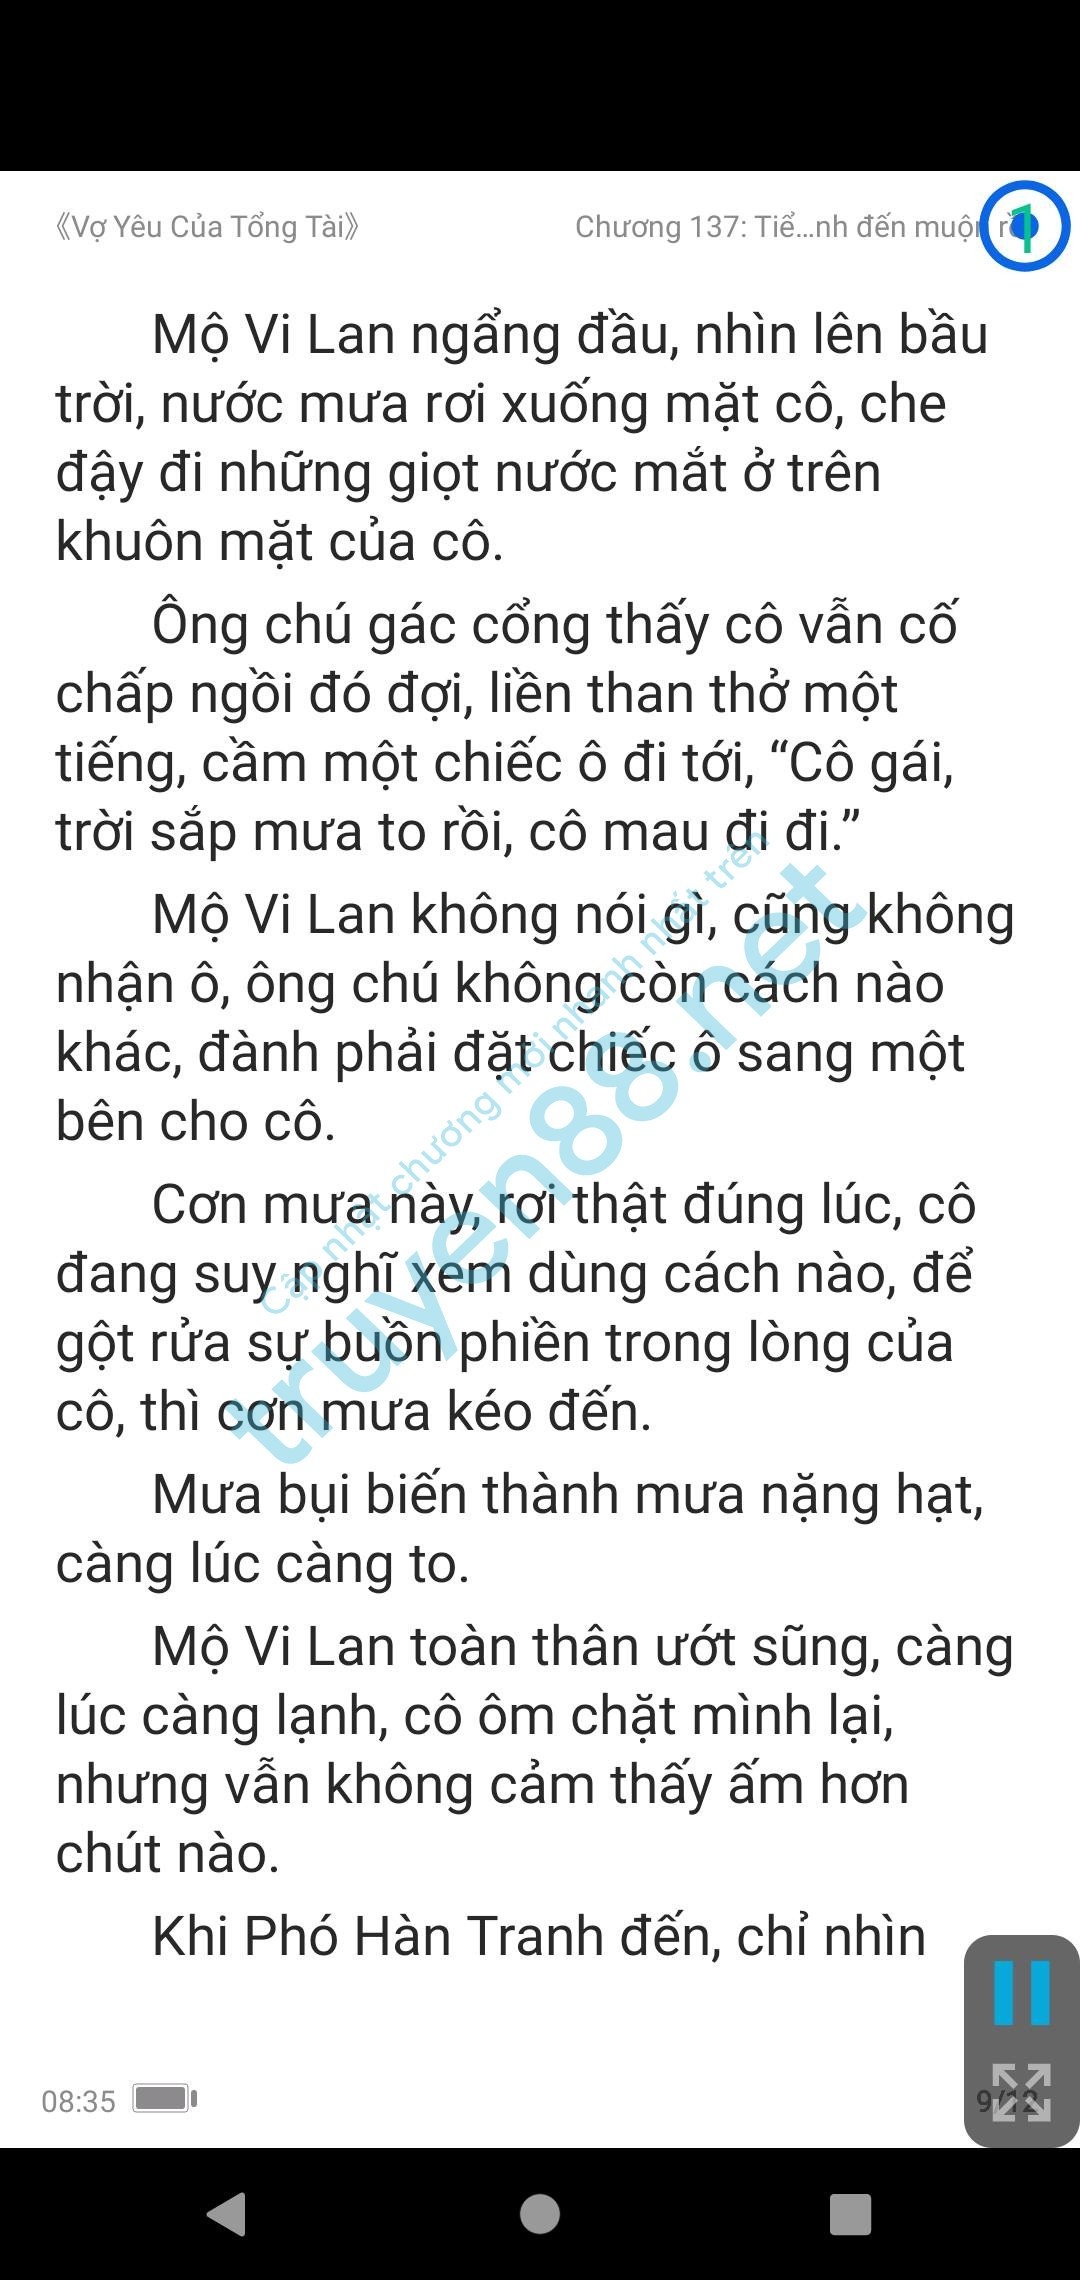 vo-yeu-cua-tong-tai-mo-vi-lan--pho-han-tranh-137-0